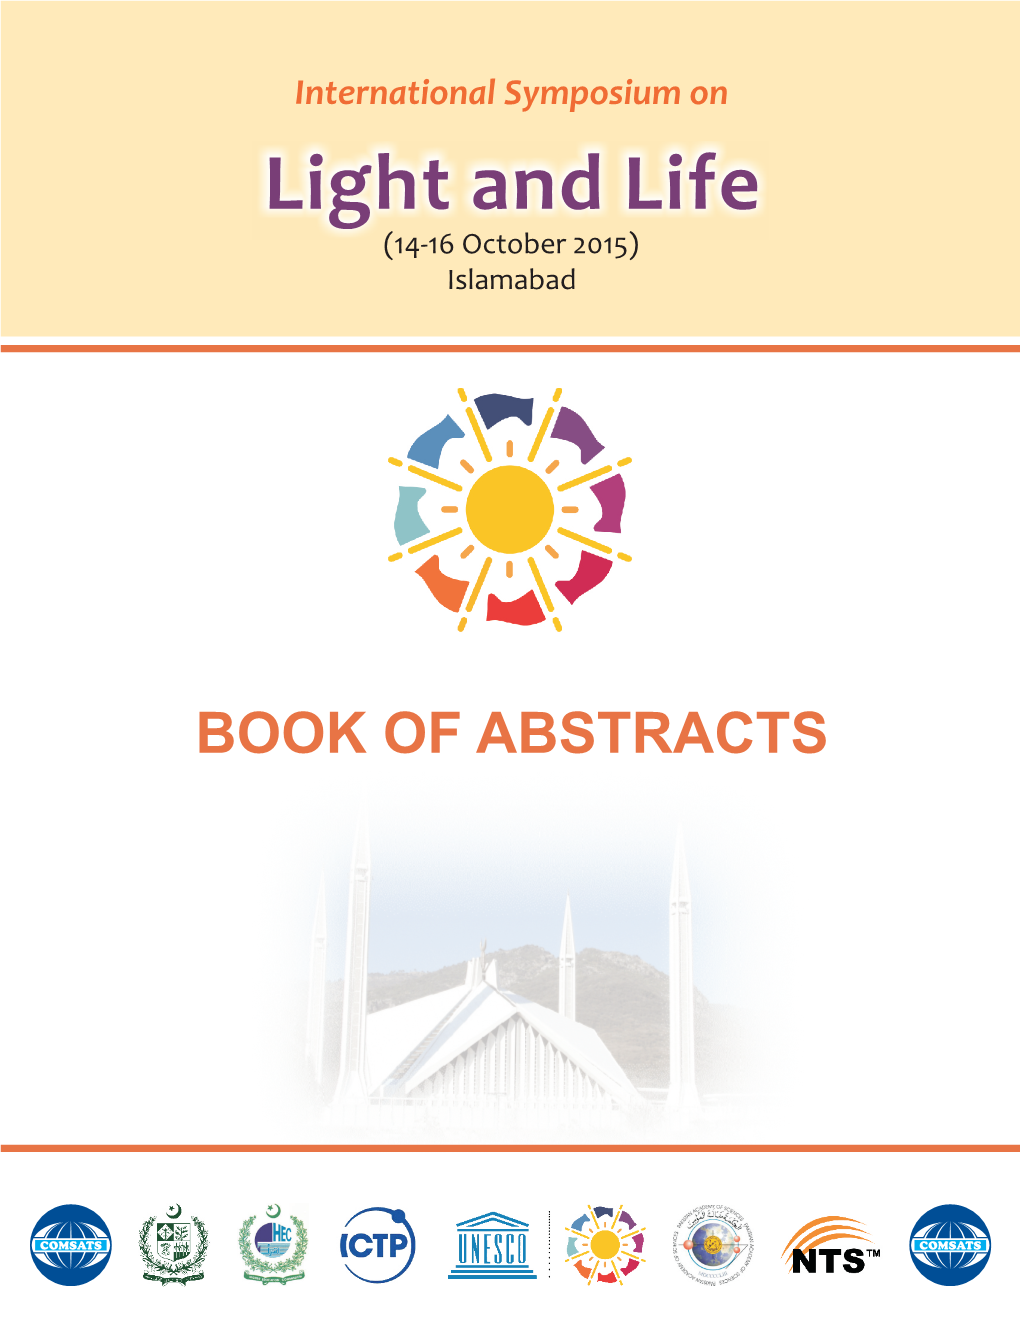 International Symposium on Light and Life (14-16 October 2015) Islamabad